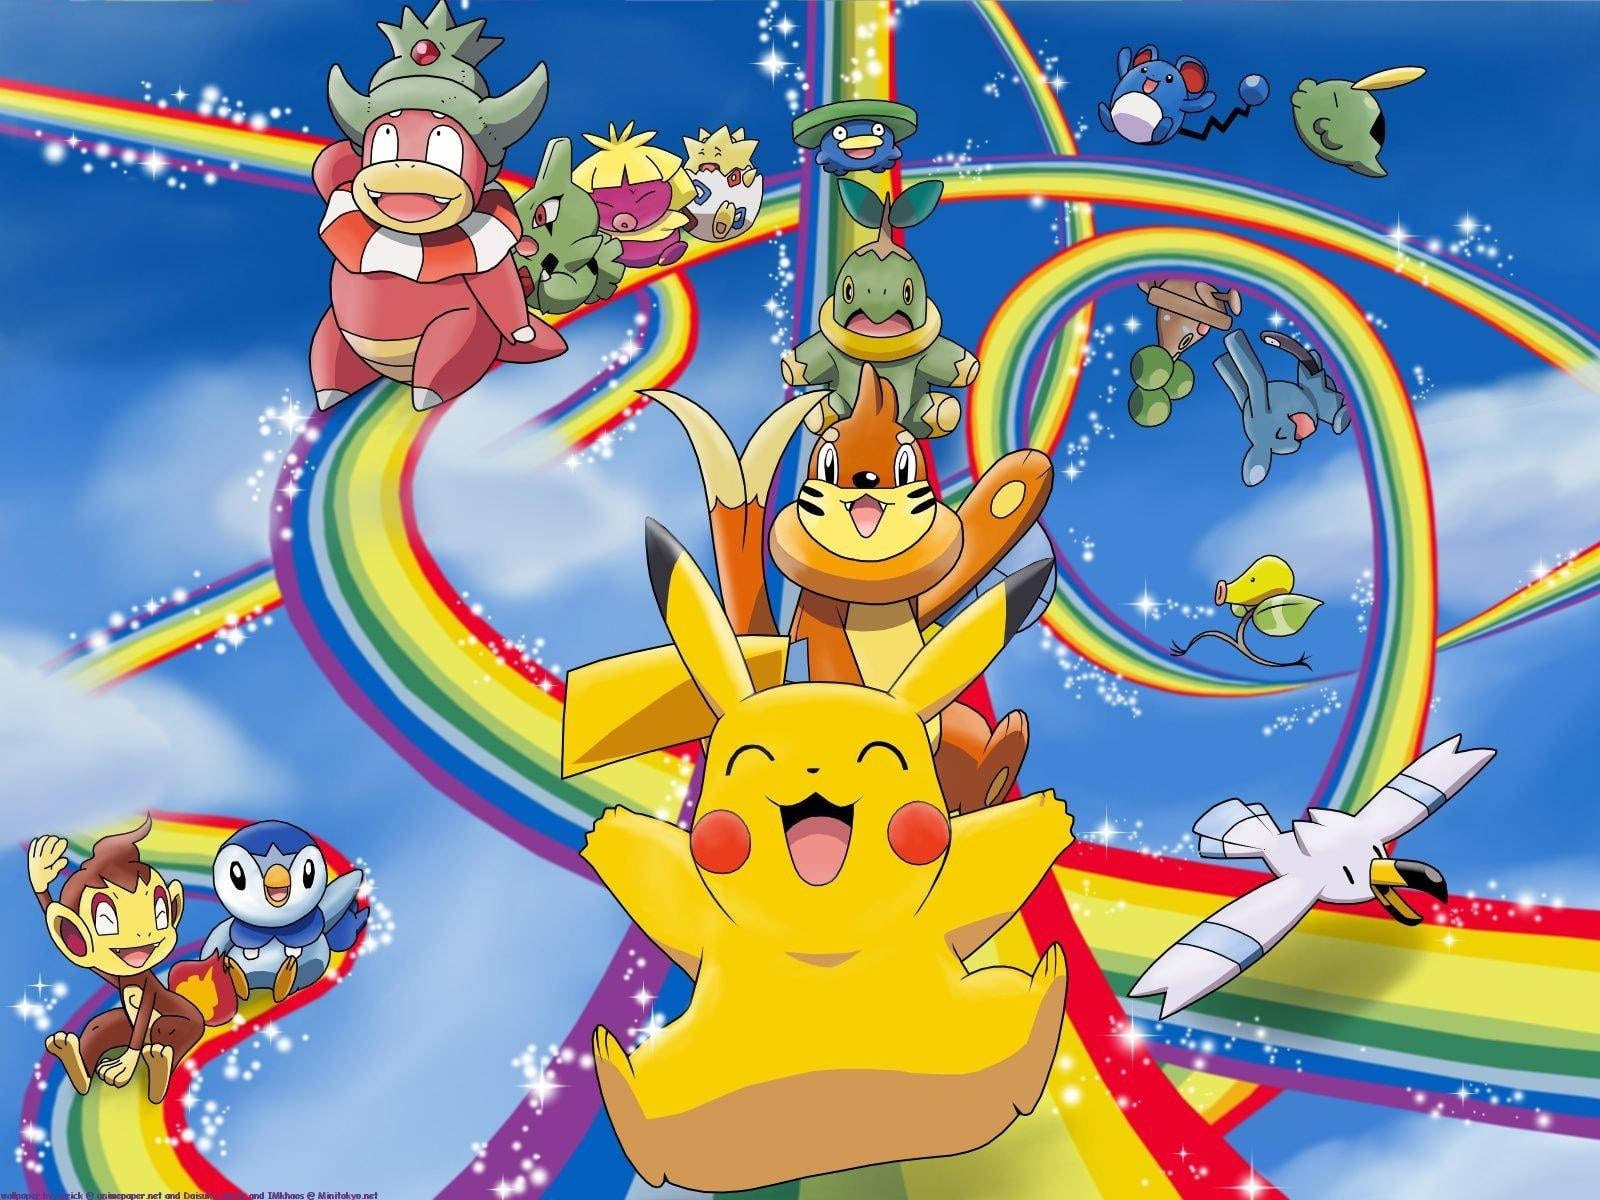 Pokemon Desktop Wallpaper